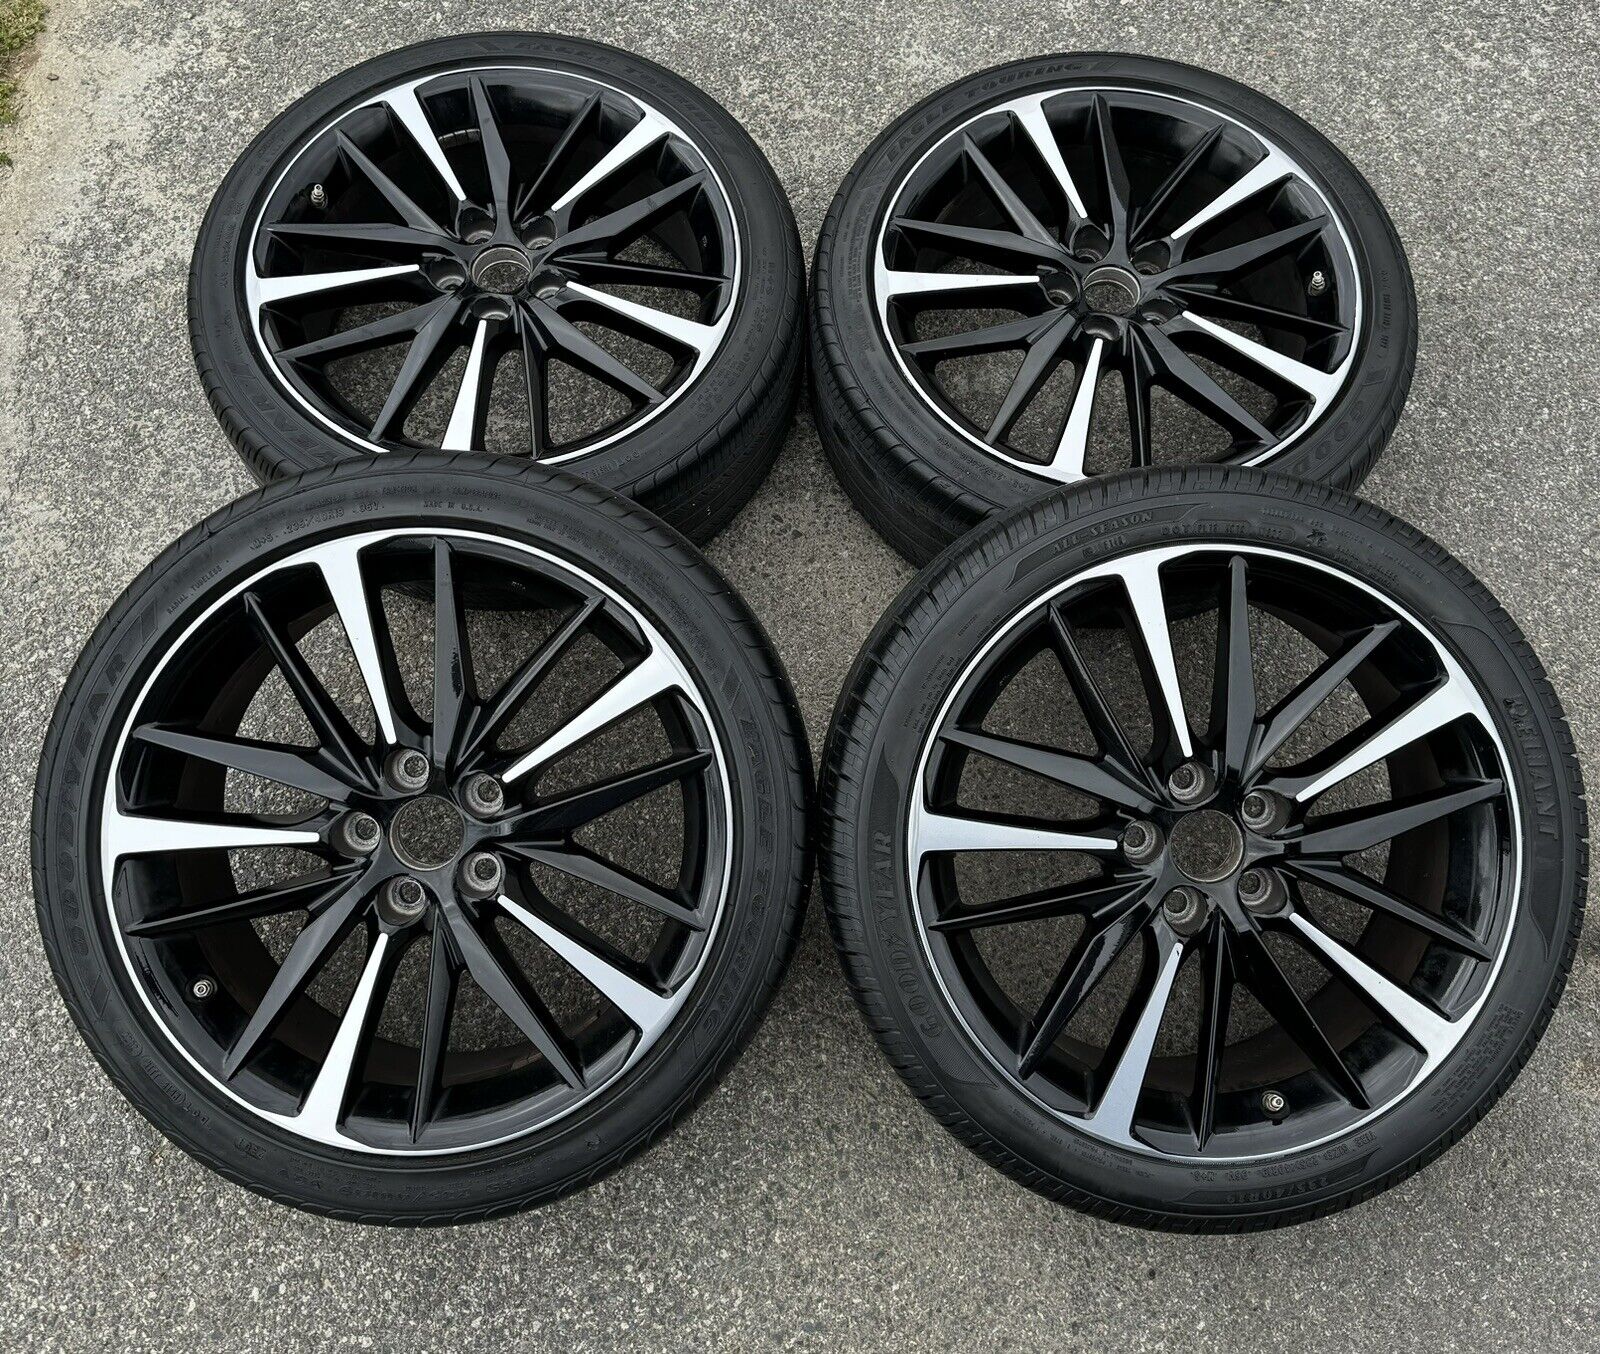 2022 Toyota Camry Avalon 19” Wheels Rims Tires 235/40/19 OEM 5x114.3